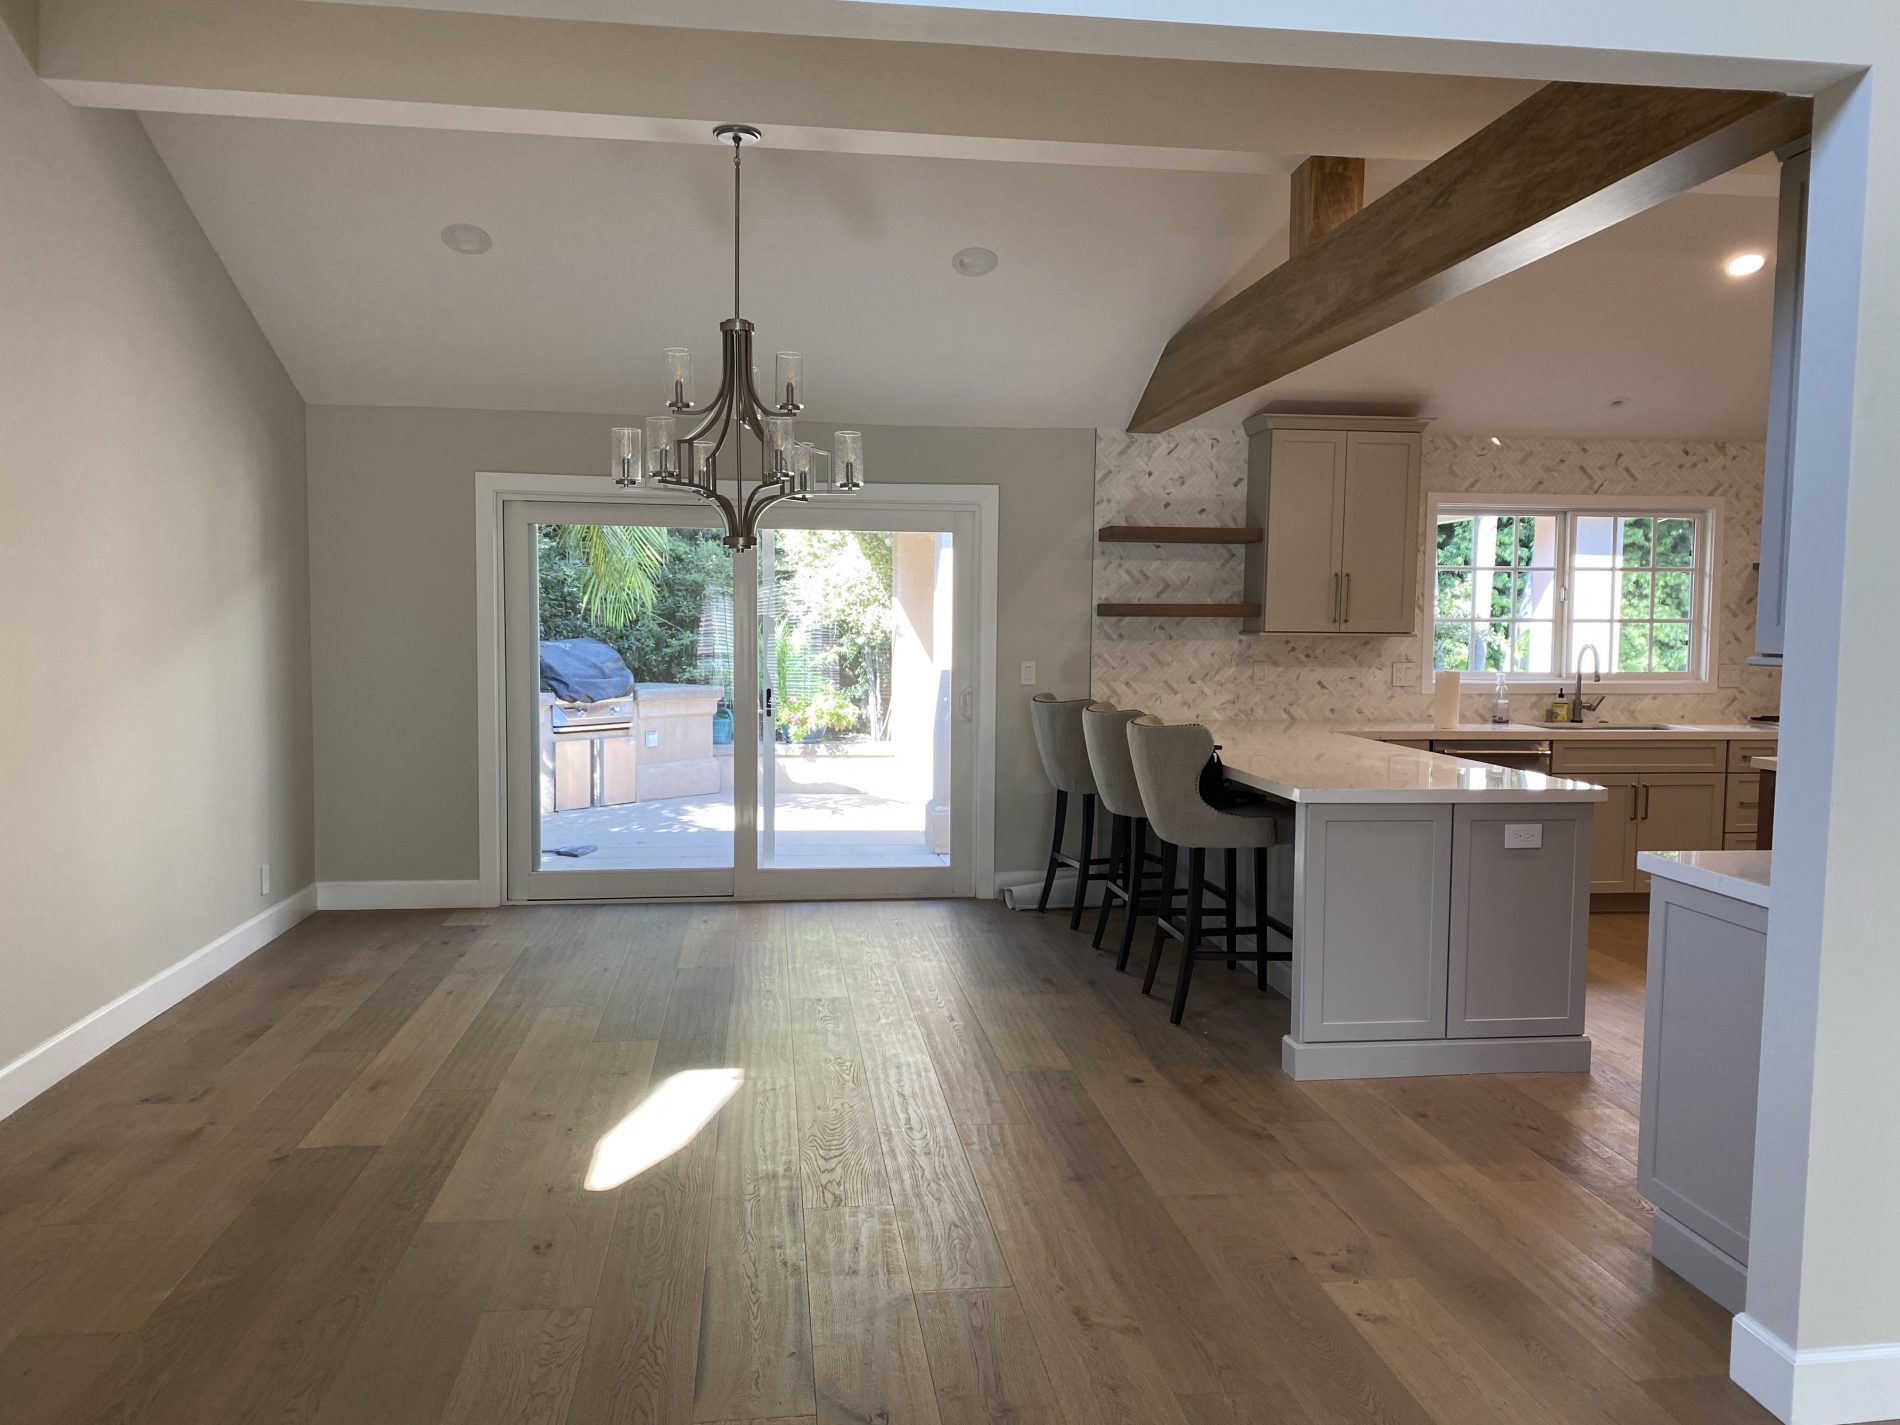 Seneca contemporary gray, cream, farmhouse, open plan kitchen with wood beam, island, shelves, herringbone tile backsplash.